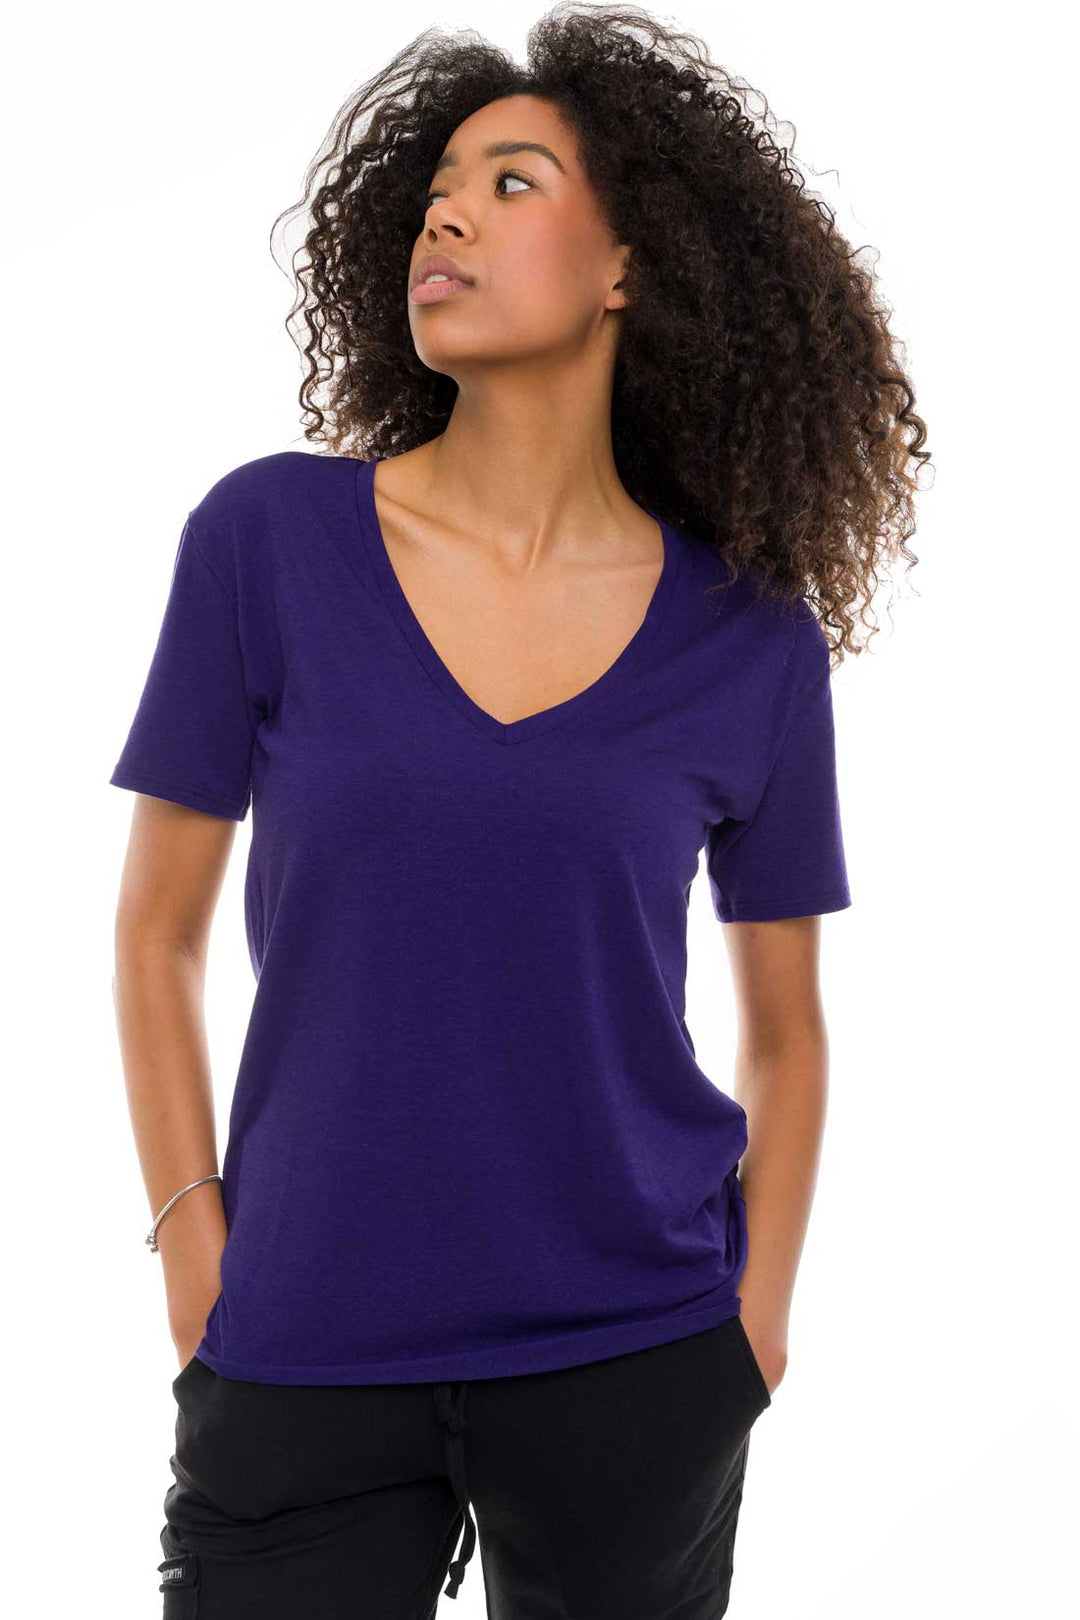 purple women's bamboo T-shirt